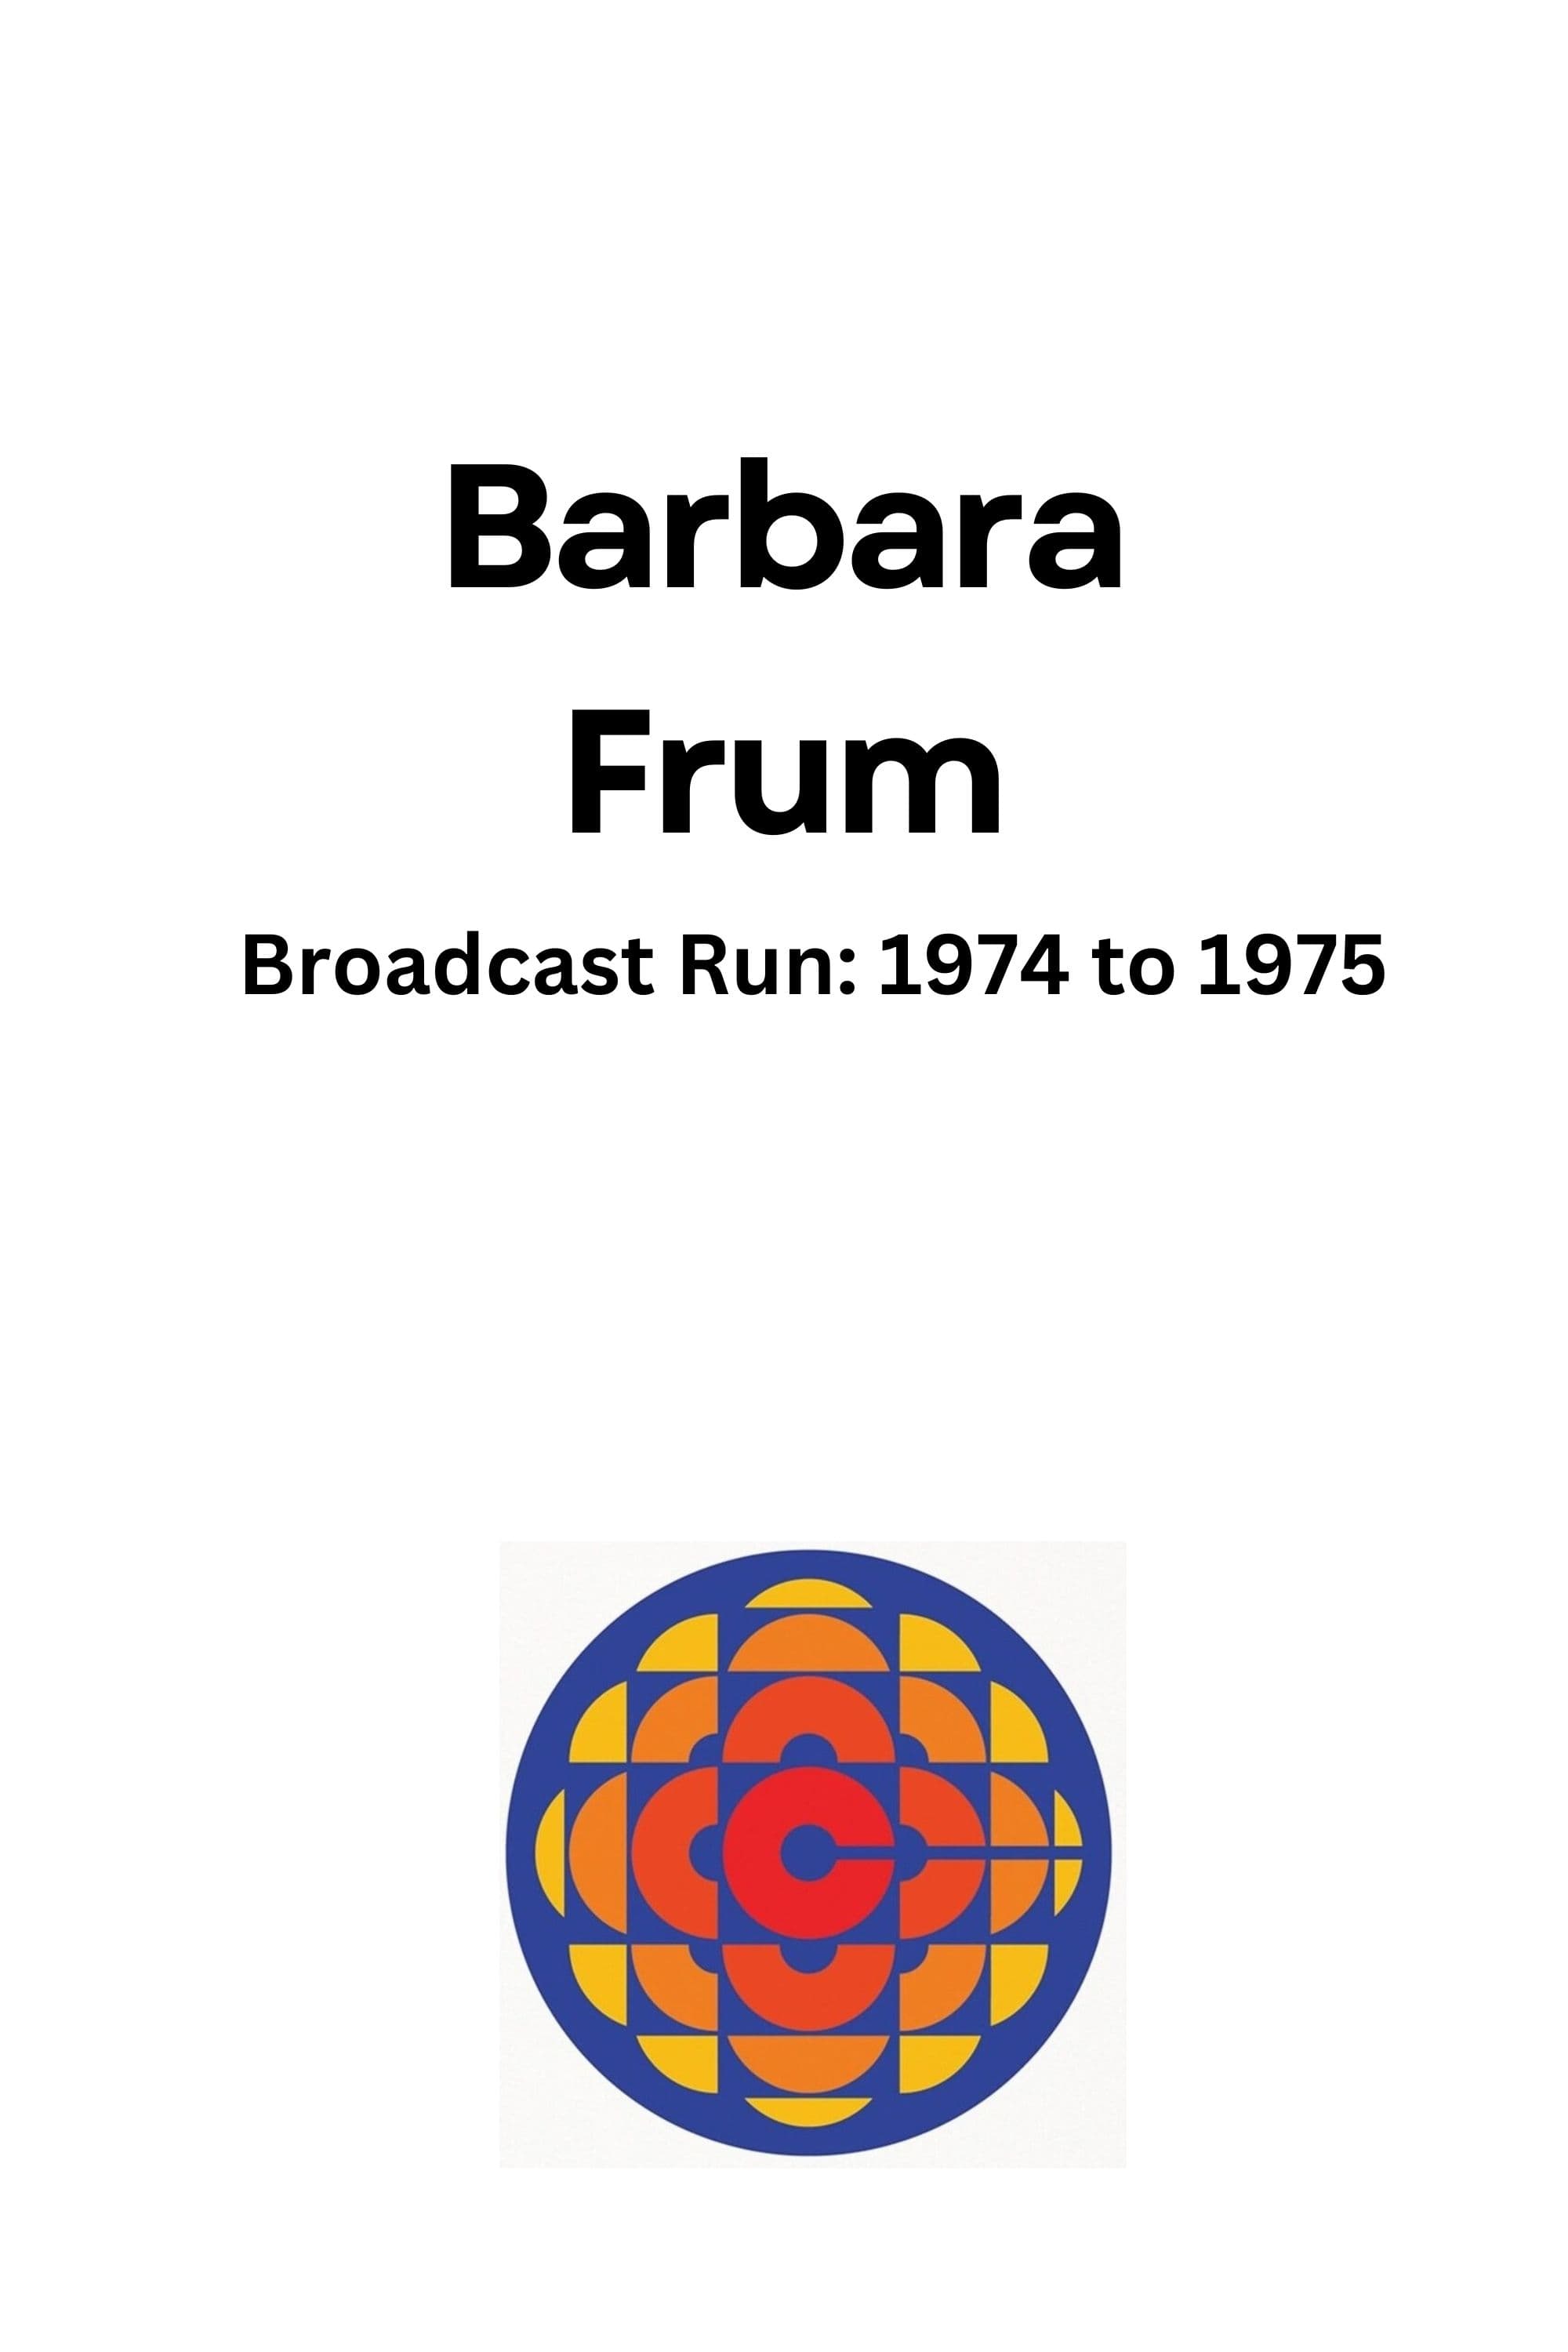 Barbara Frum